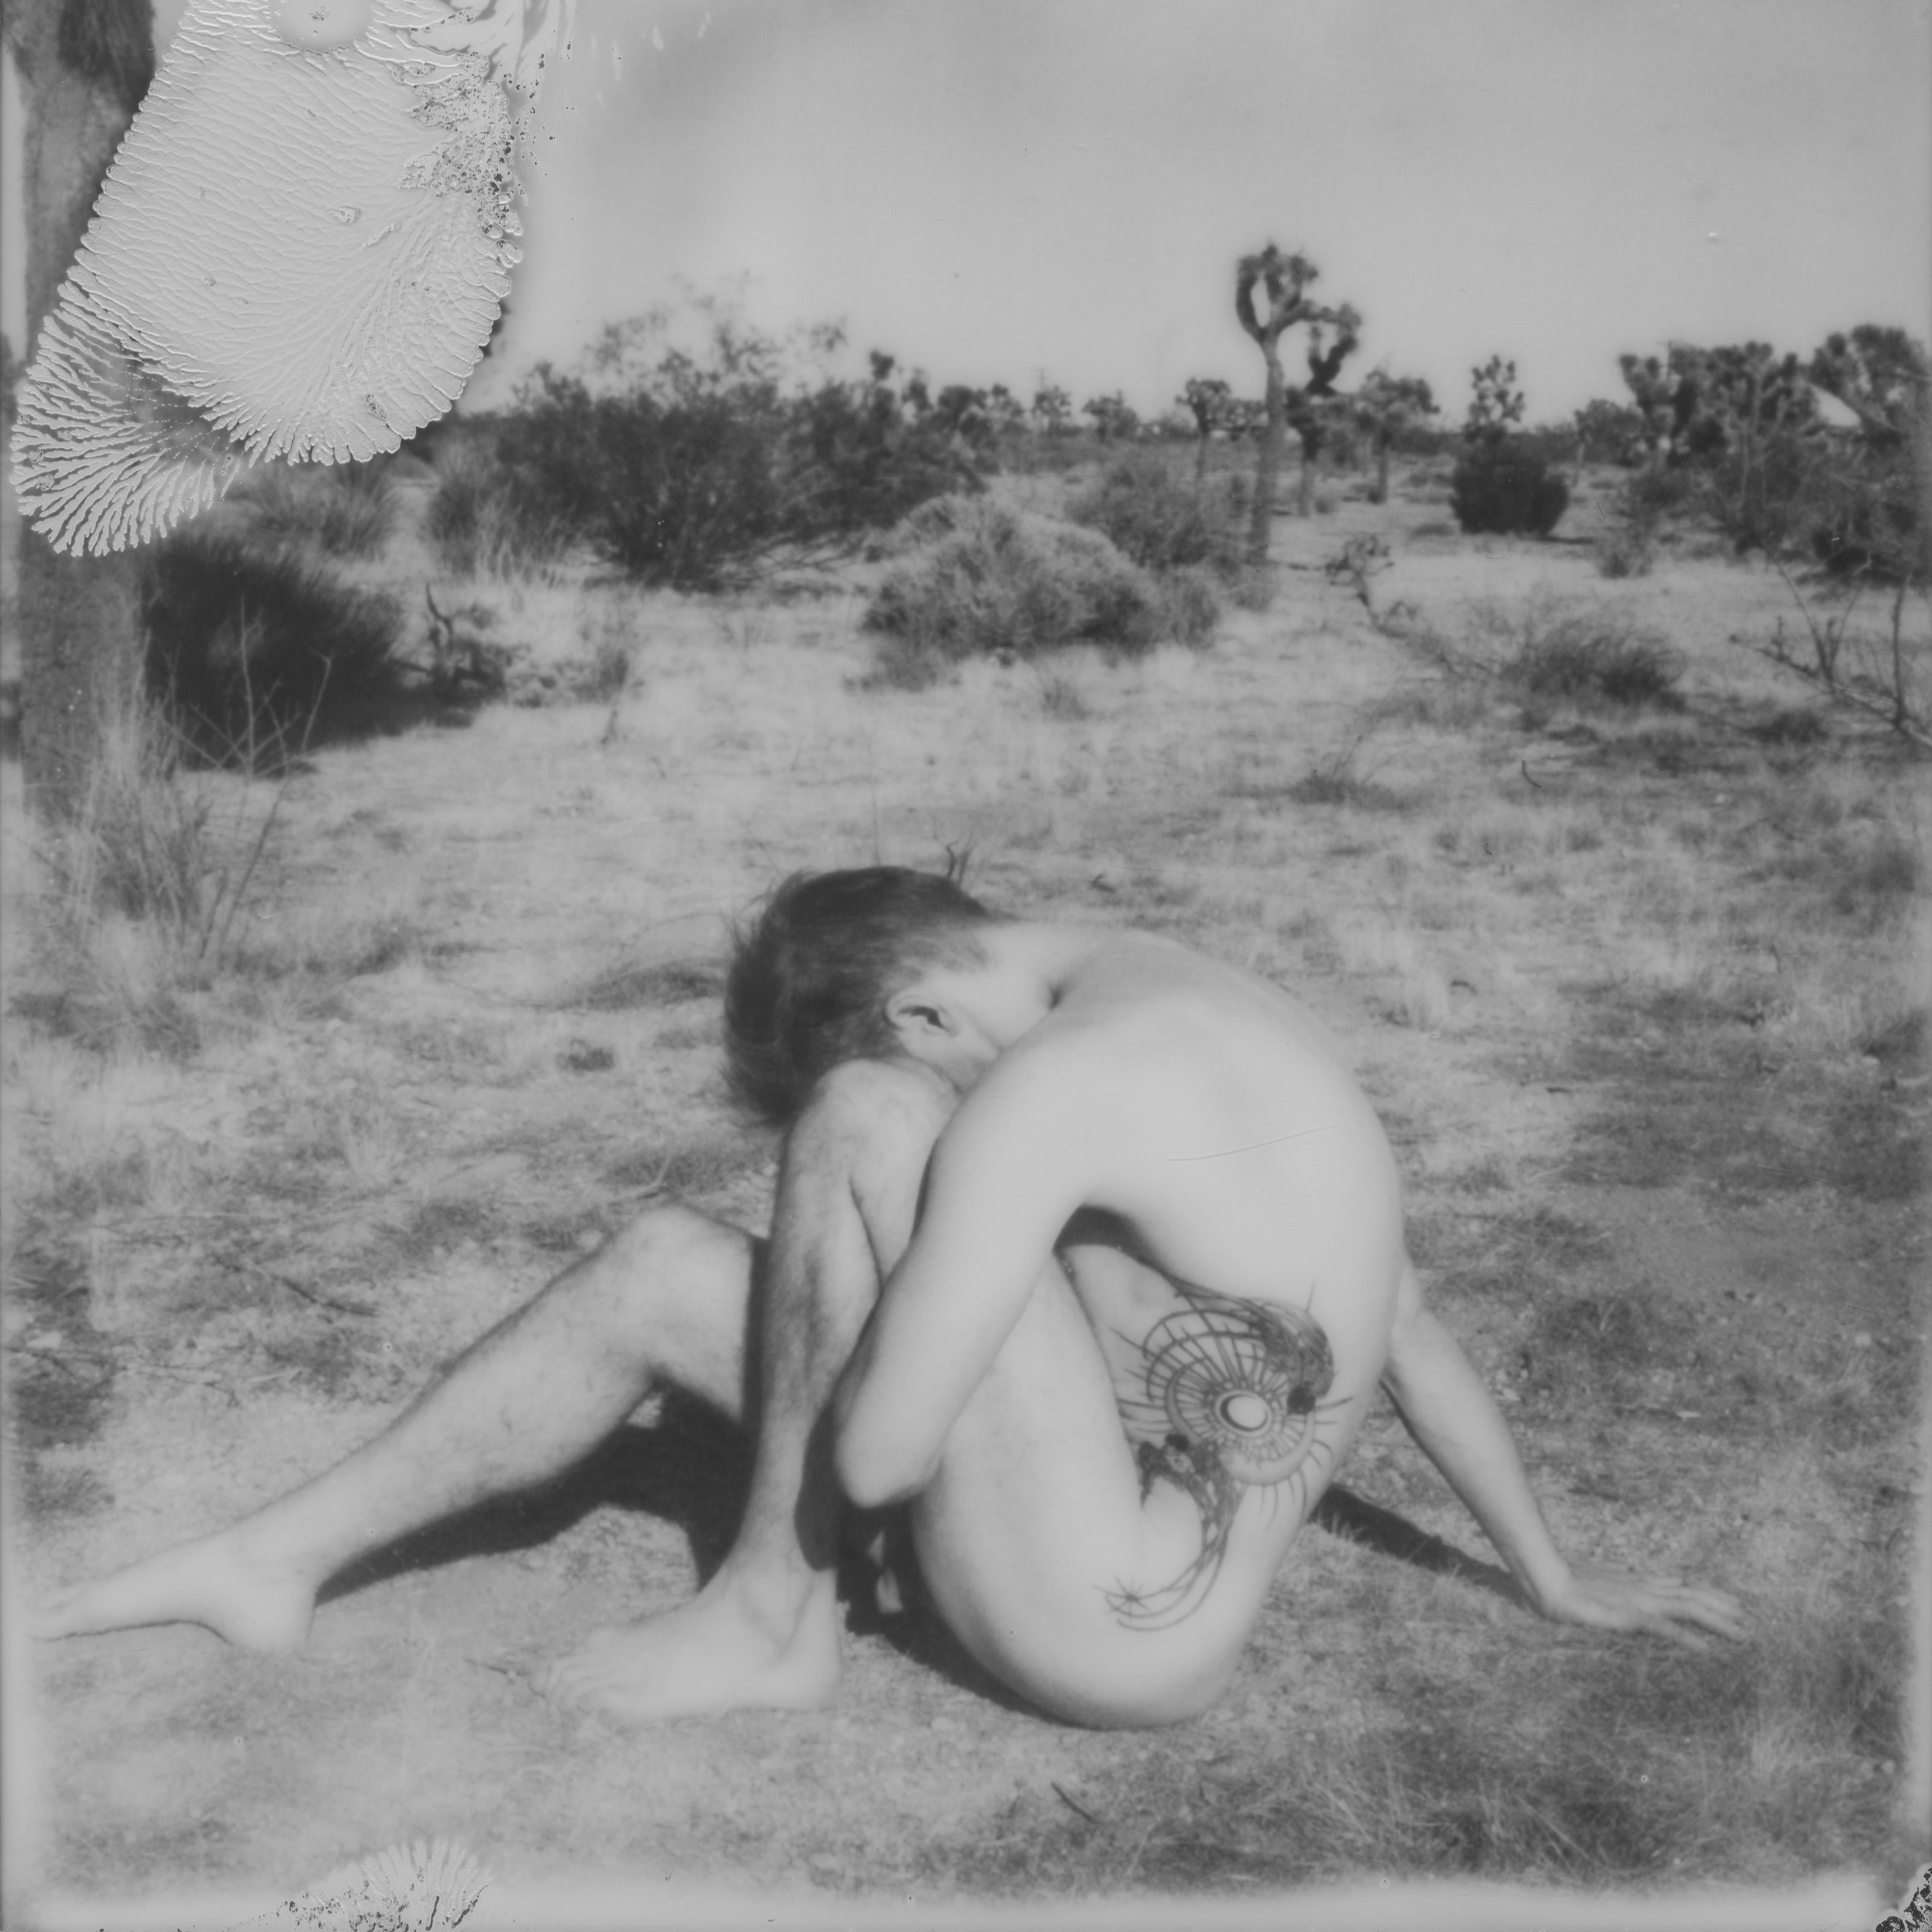 Come undone - Contemporary, Polaroid, Nude, 21st Century, Joshua Tree